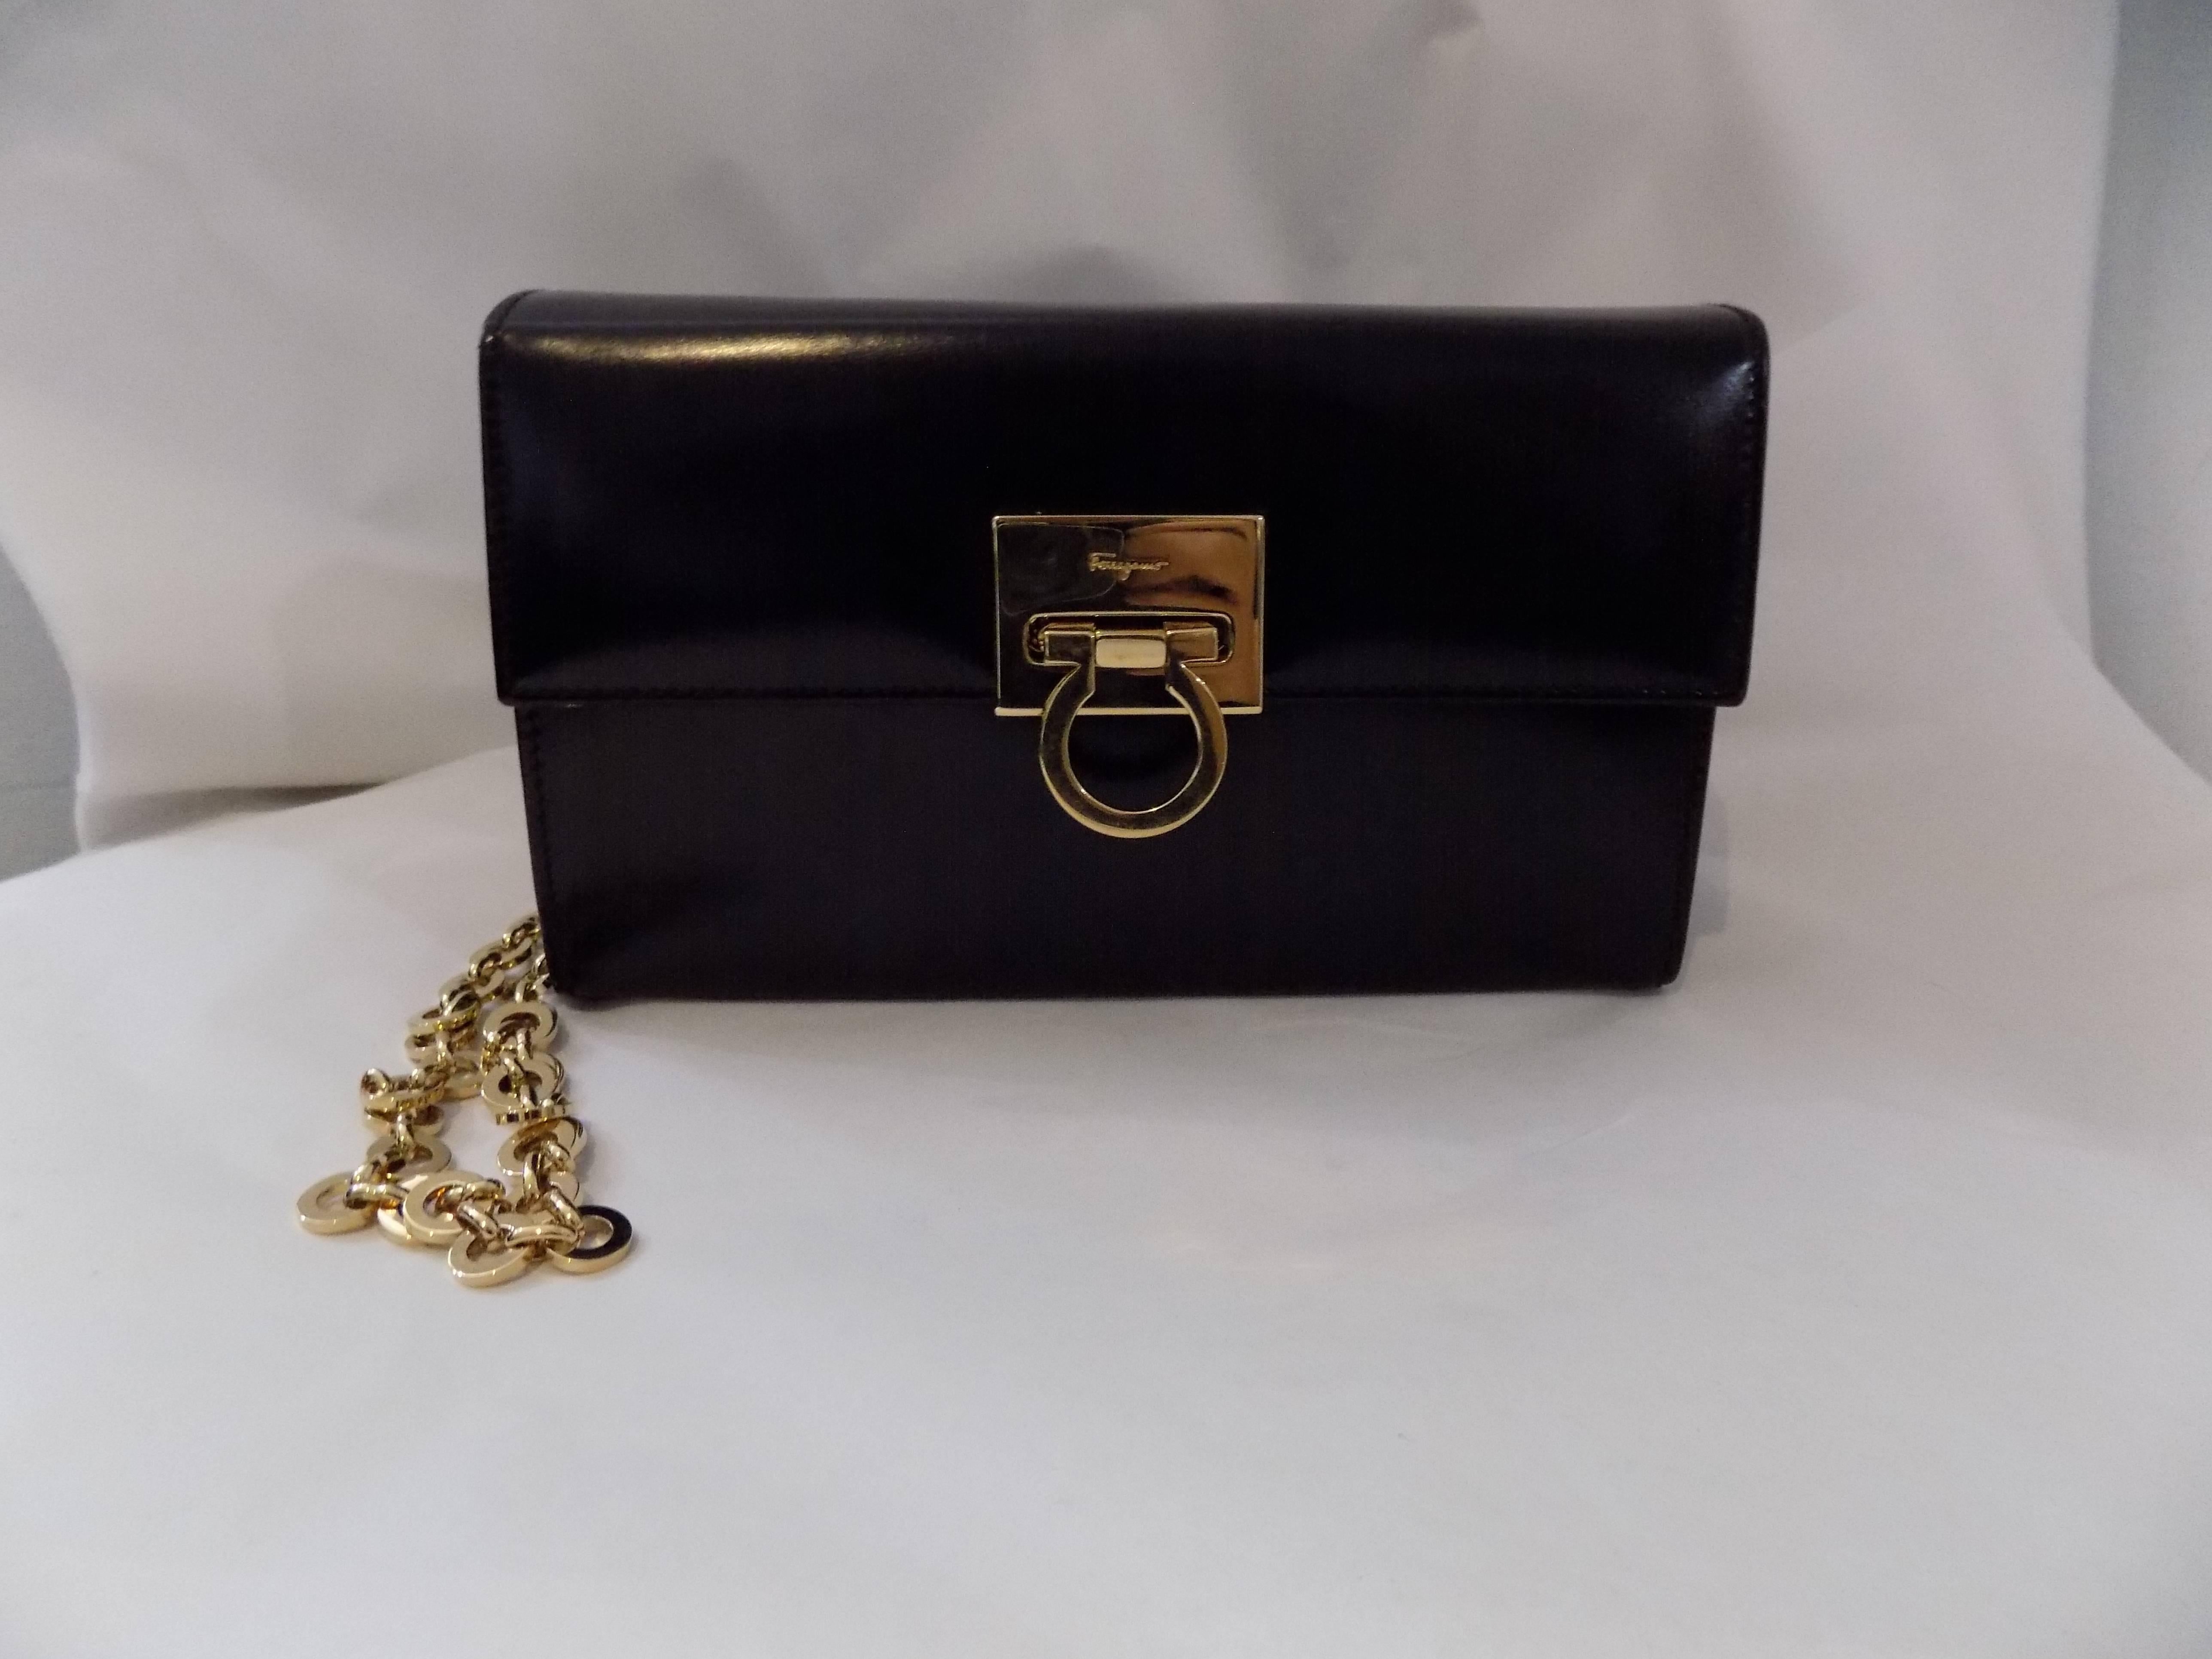  Salvatore Ferragamo black polished clutch / shoulder bag w gold chain 1